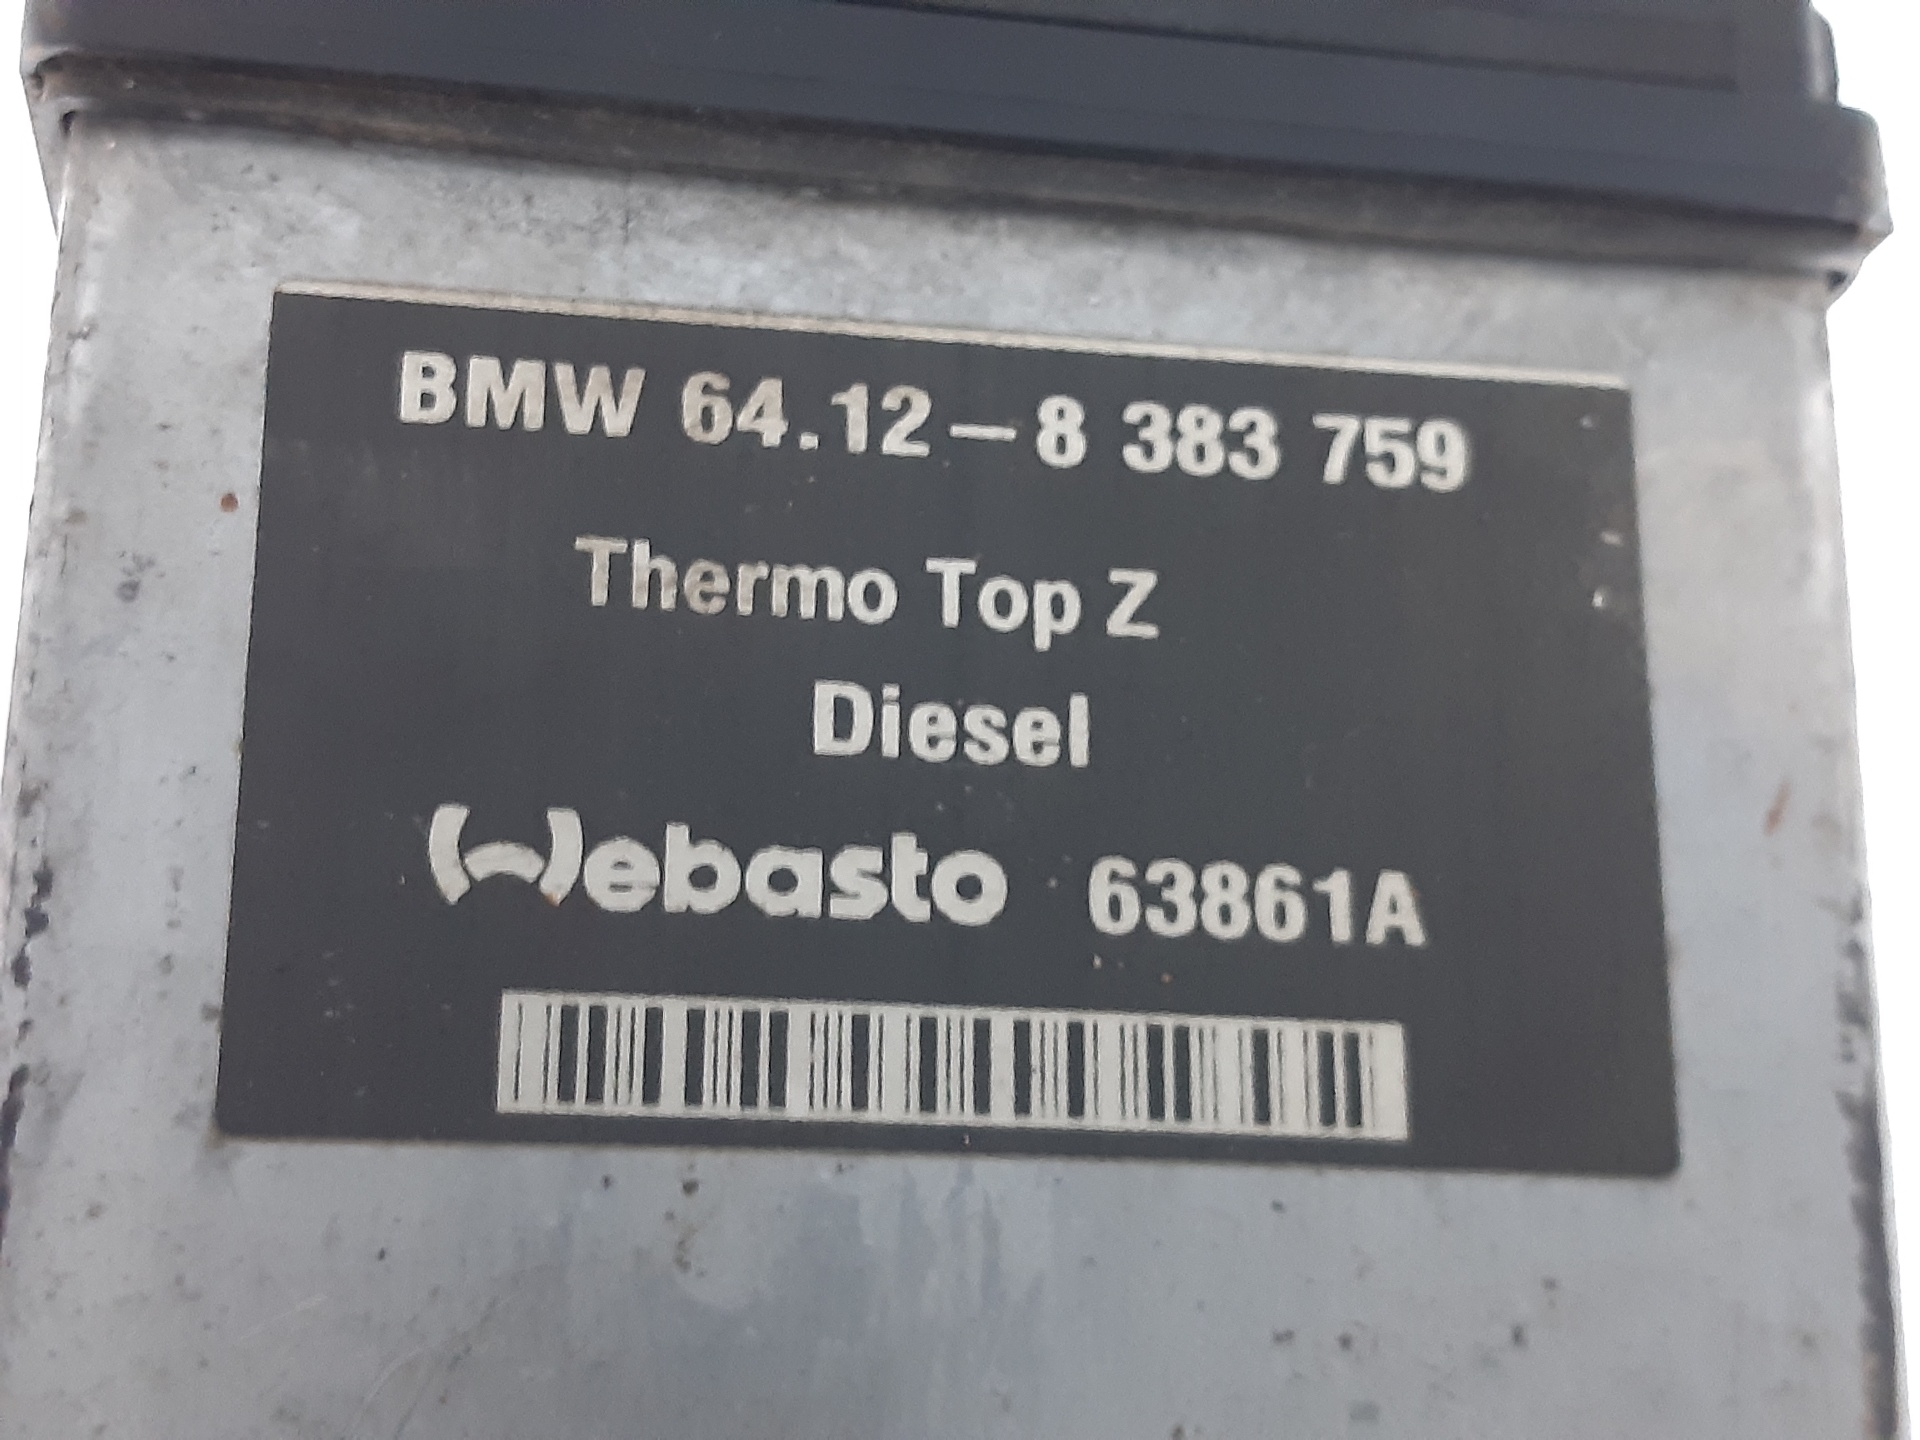 BMW 3 Series E46 (1997-2006) Interior Heater Flap Motor Actuator 64128383759 18777225